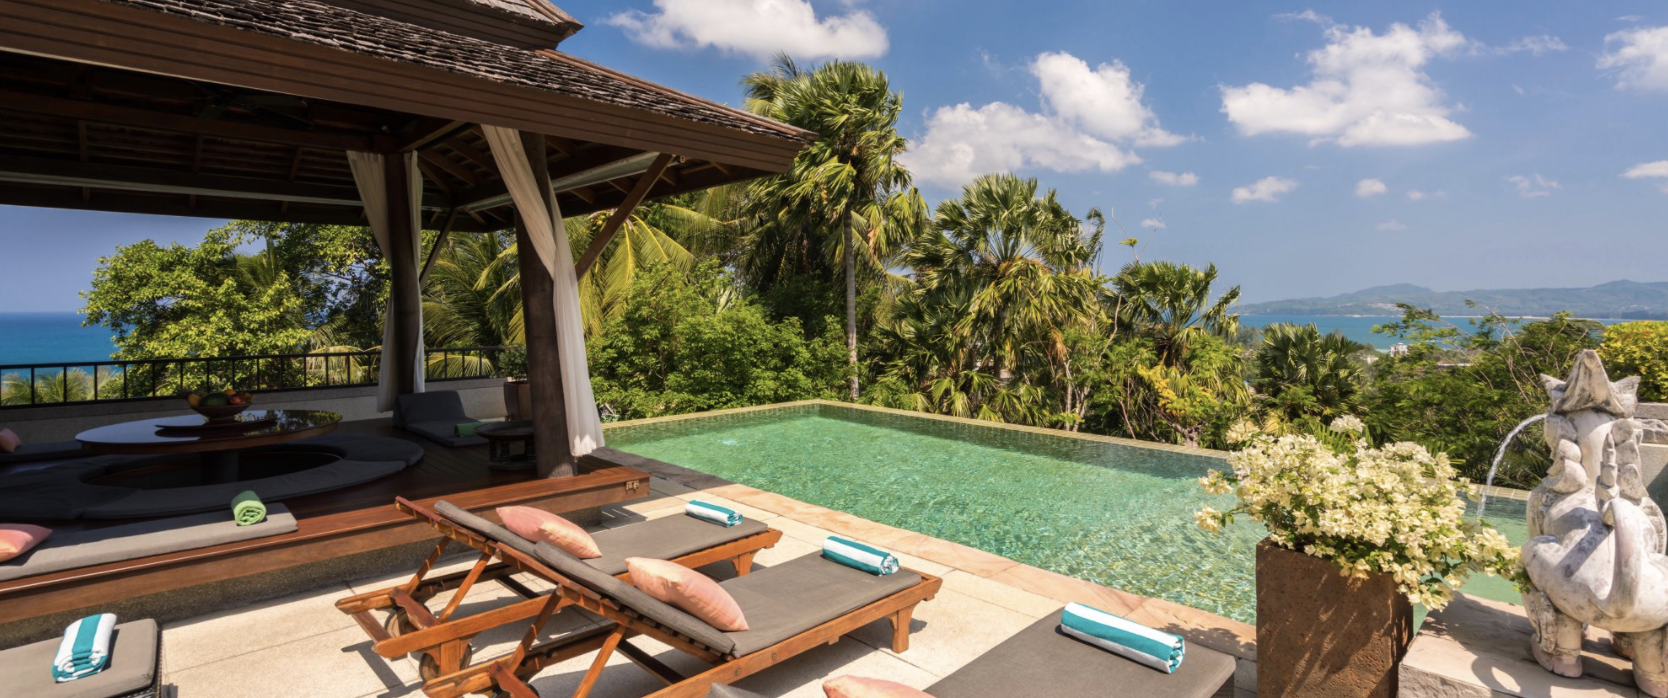 exclusive villa sanyanga in phuket